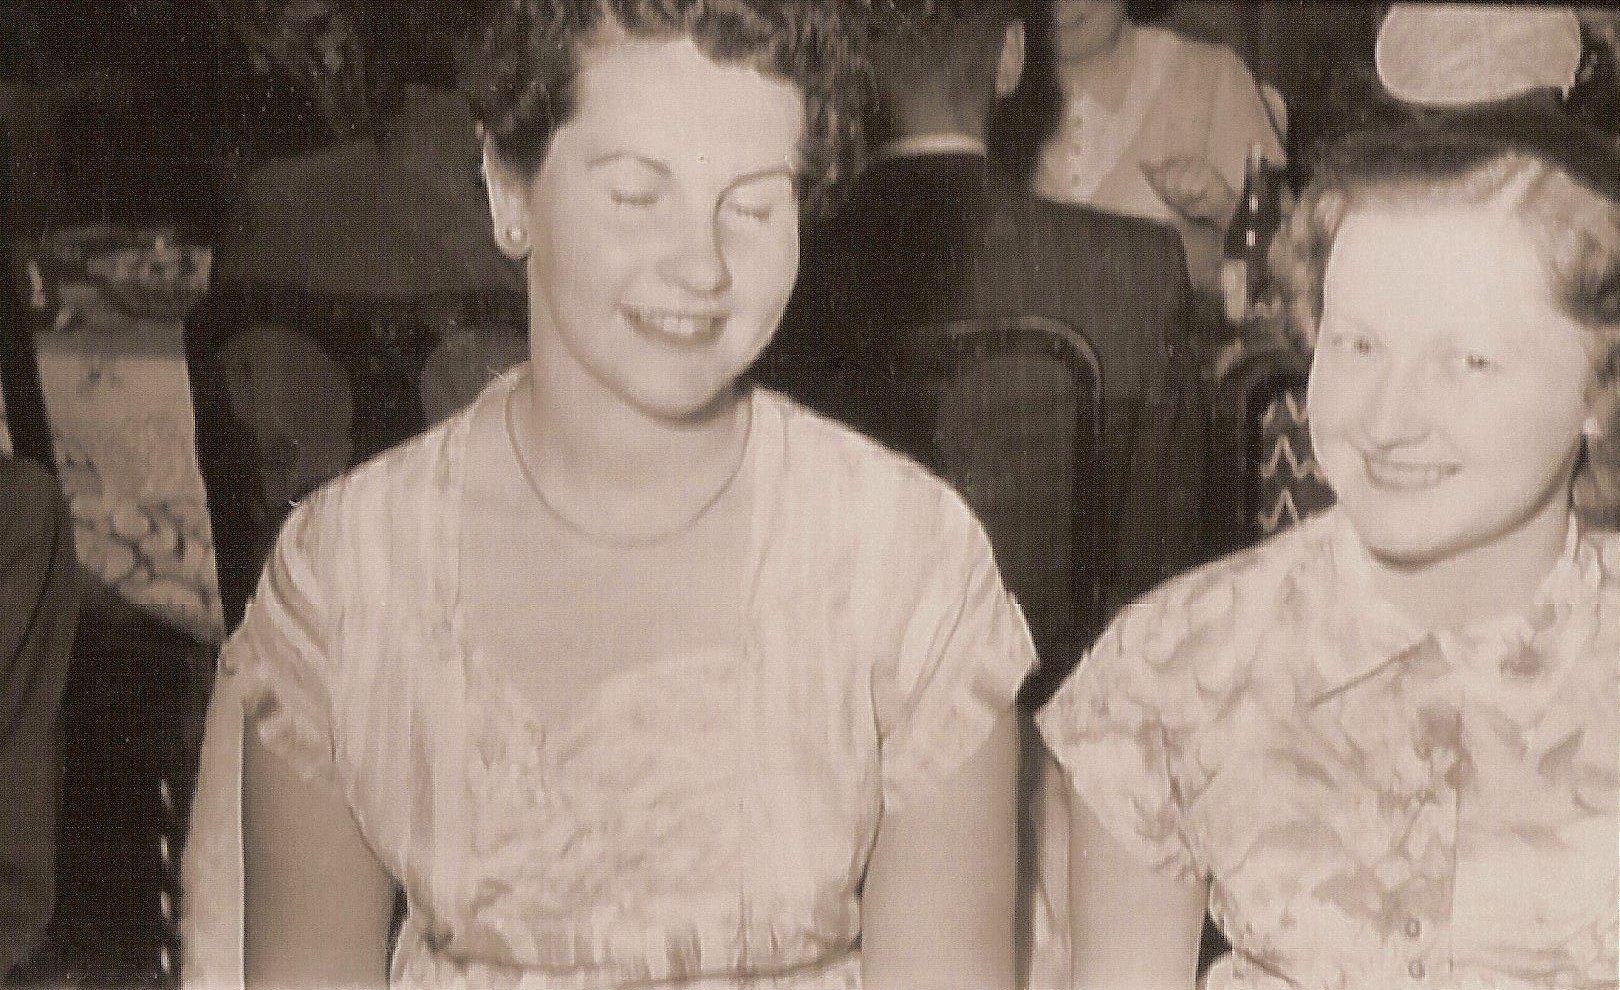 Joan Latta and Margaret Hellier